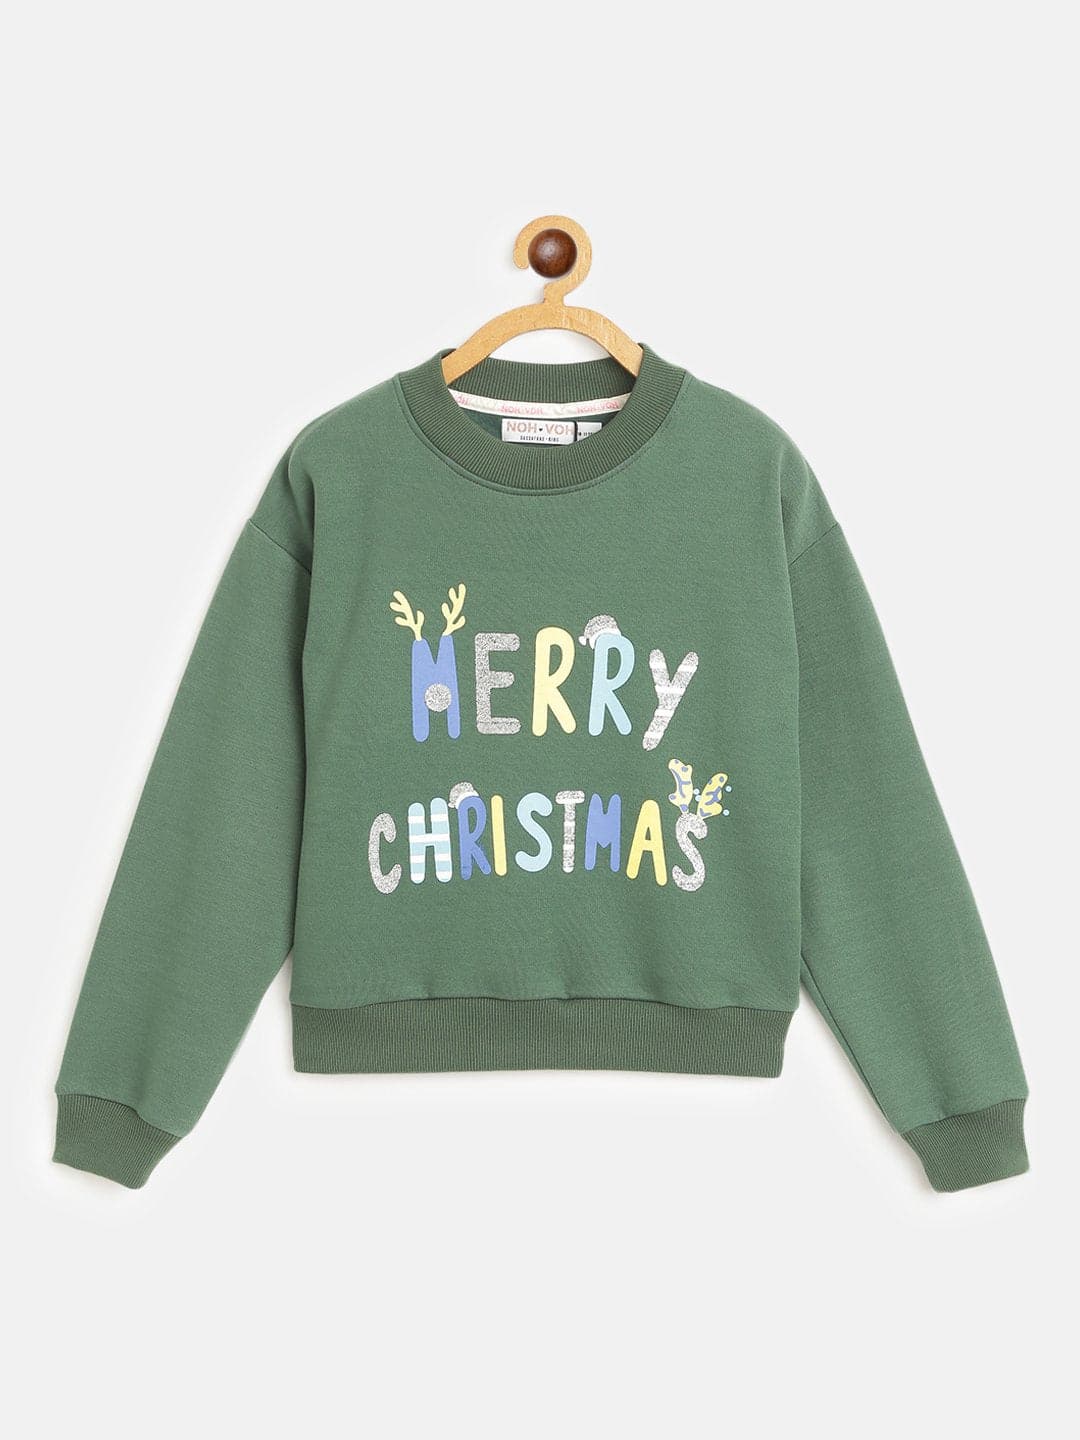 Buy Girls Green MERRY CHRISTMAS Print Sweatshirt Online at Sassafras